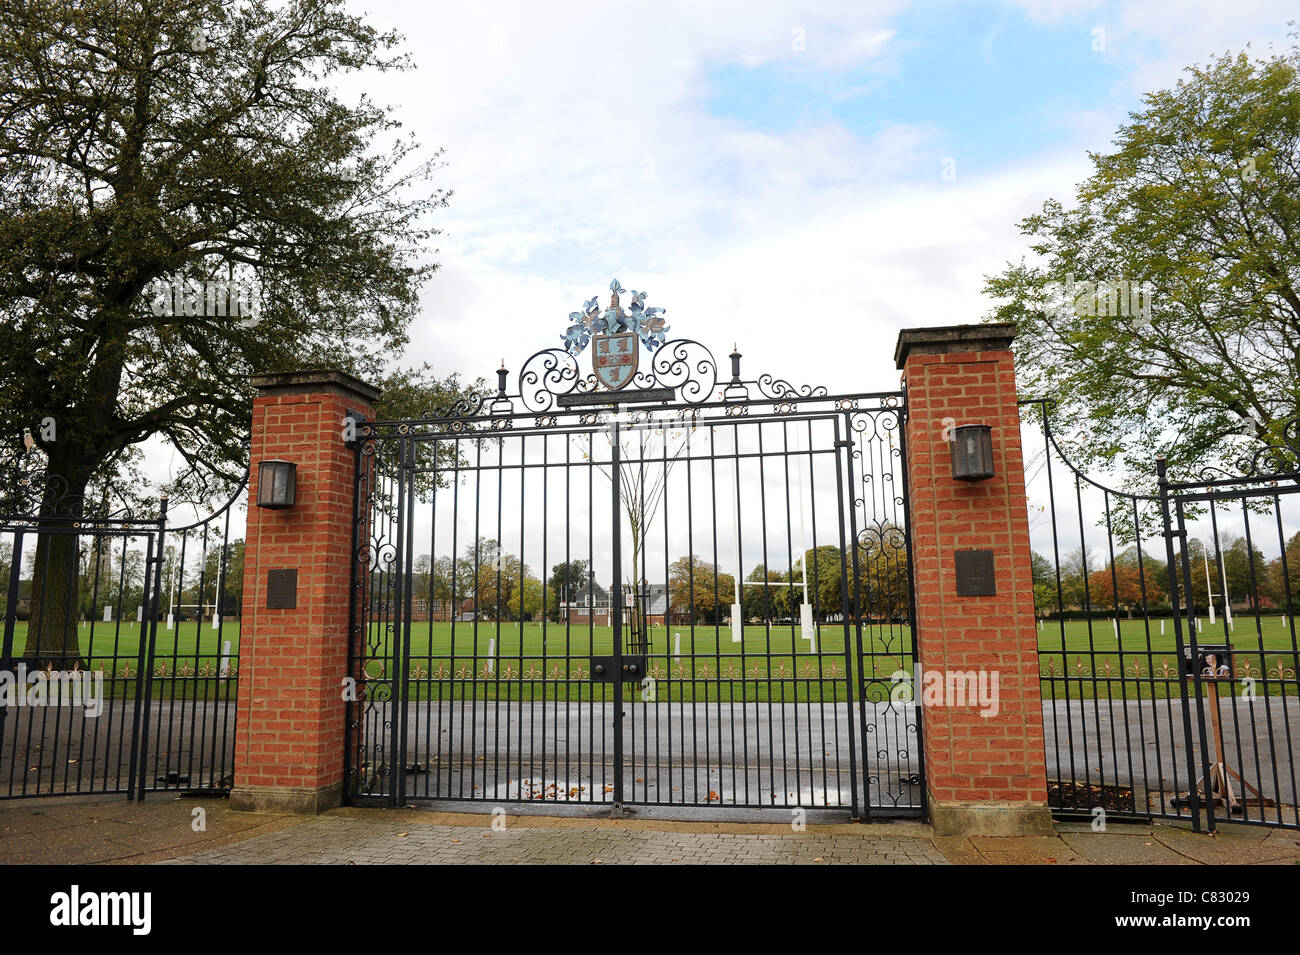 Rugby Public School entrance gates Warwickshire England Uk Stock Photo